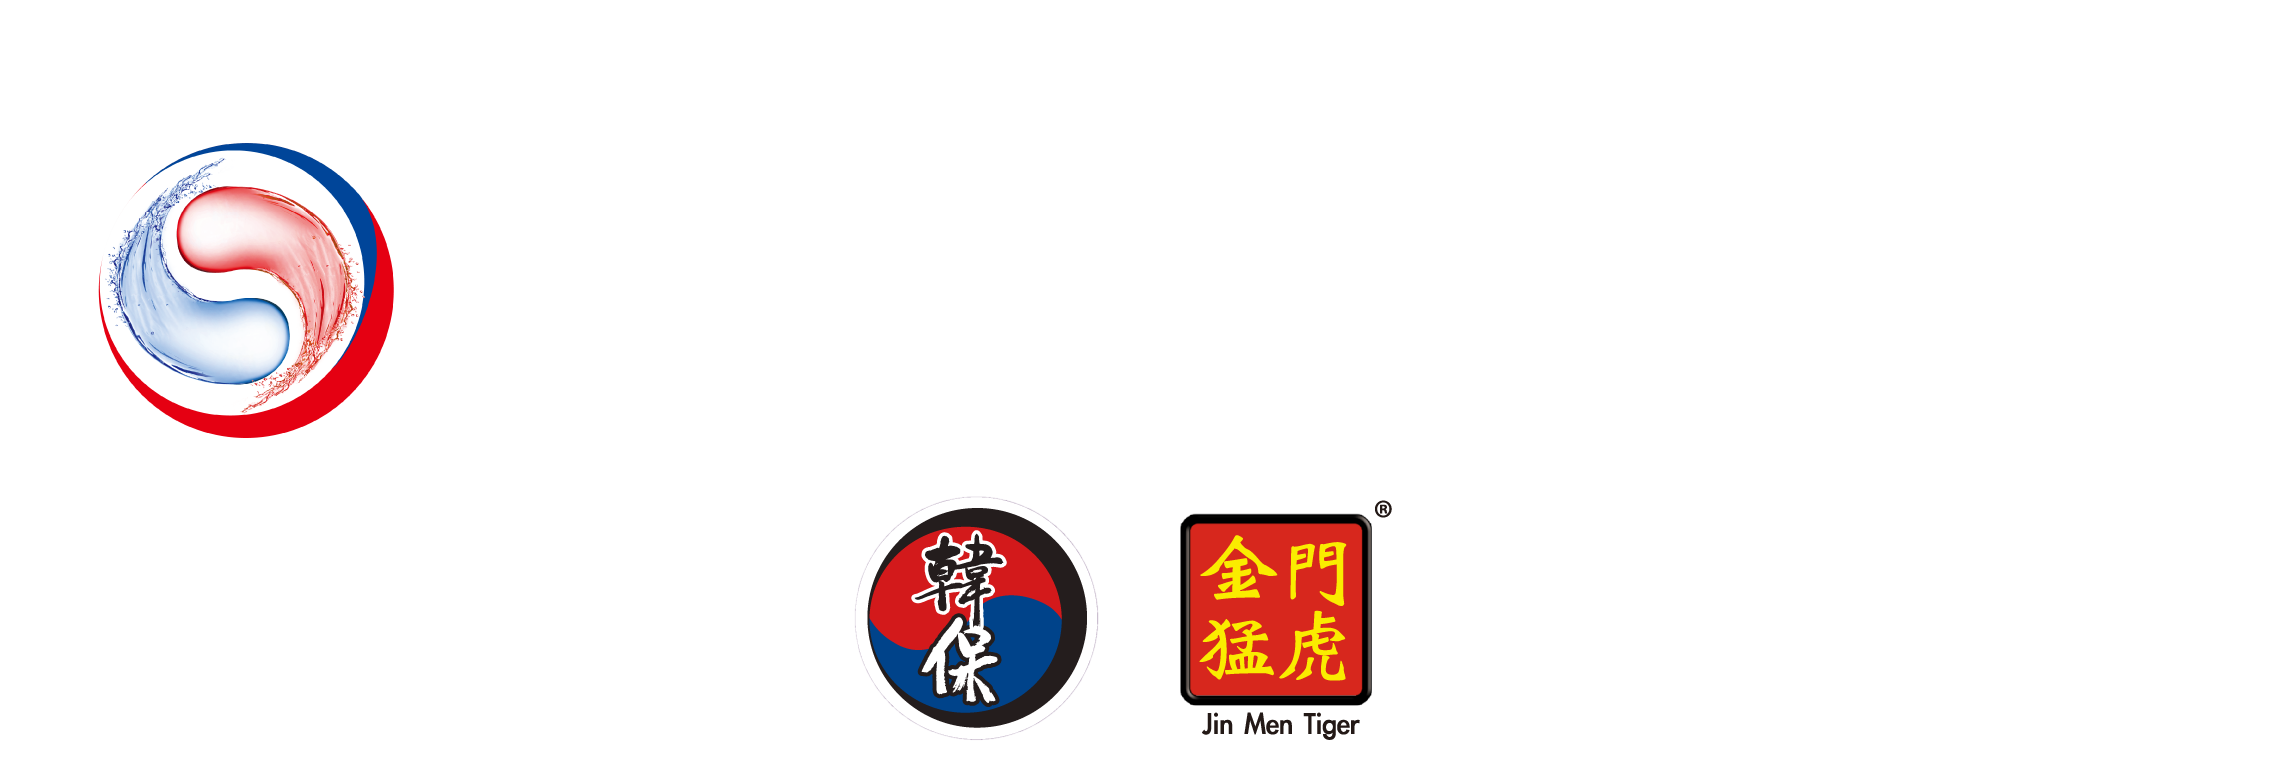 雅悦实业有限公司 Asia Health Products Limited